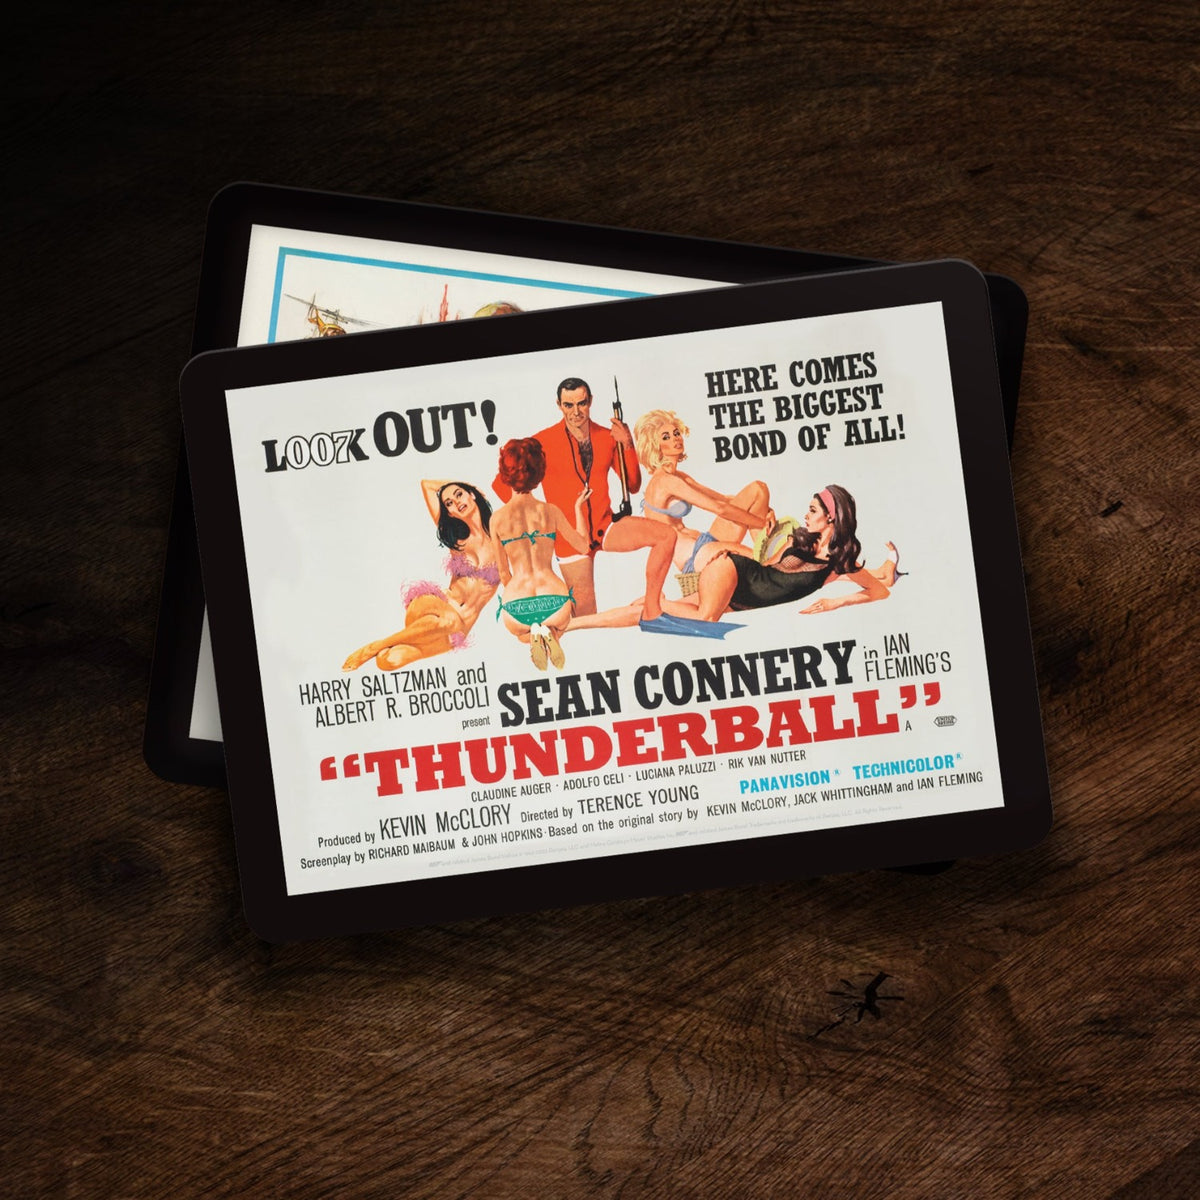 James Bond Tischset - Thunderball Edition